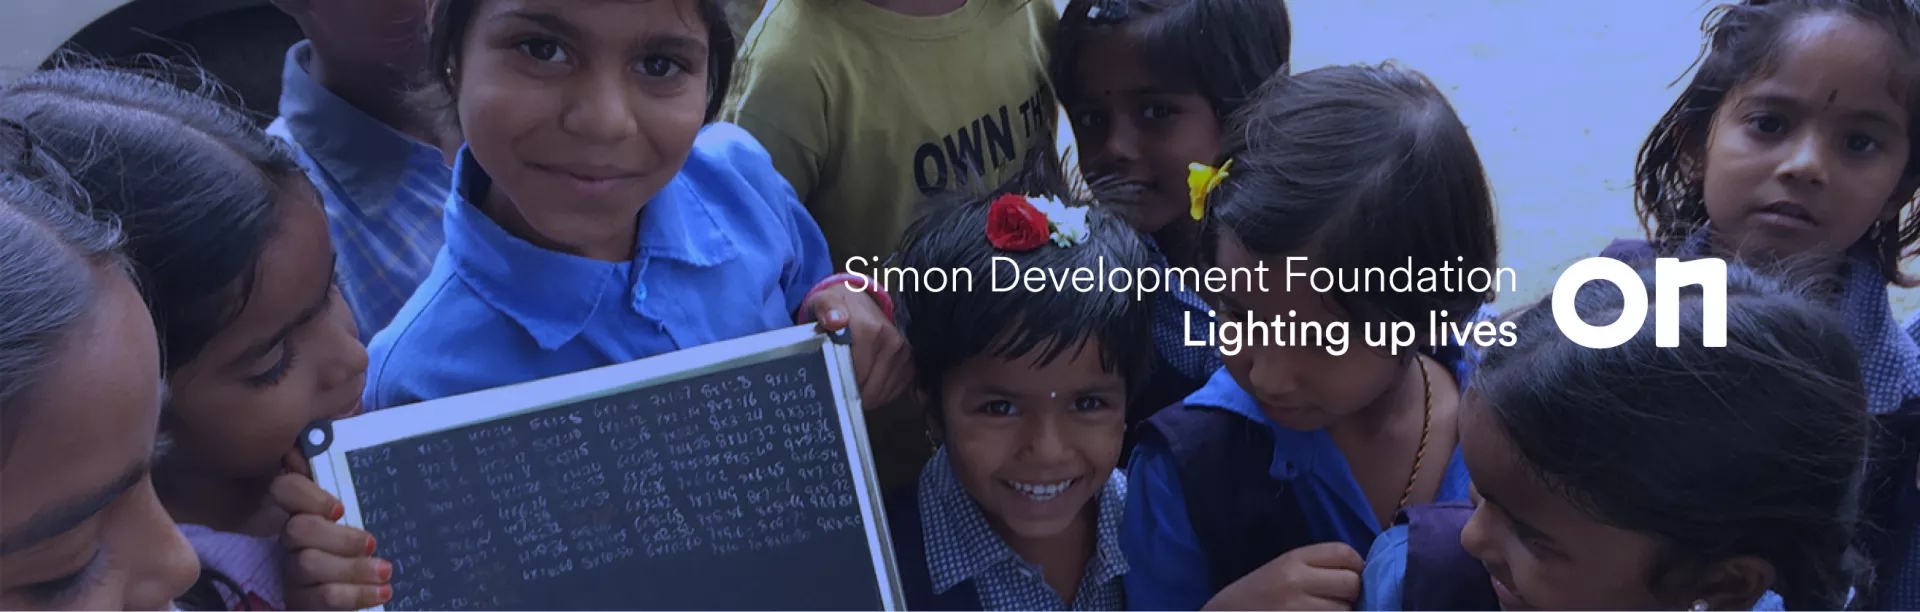 Simon Development Foundation